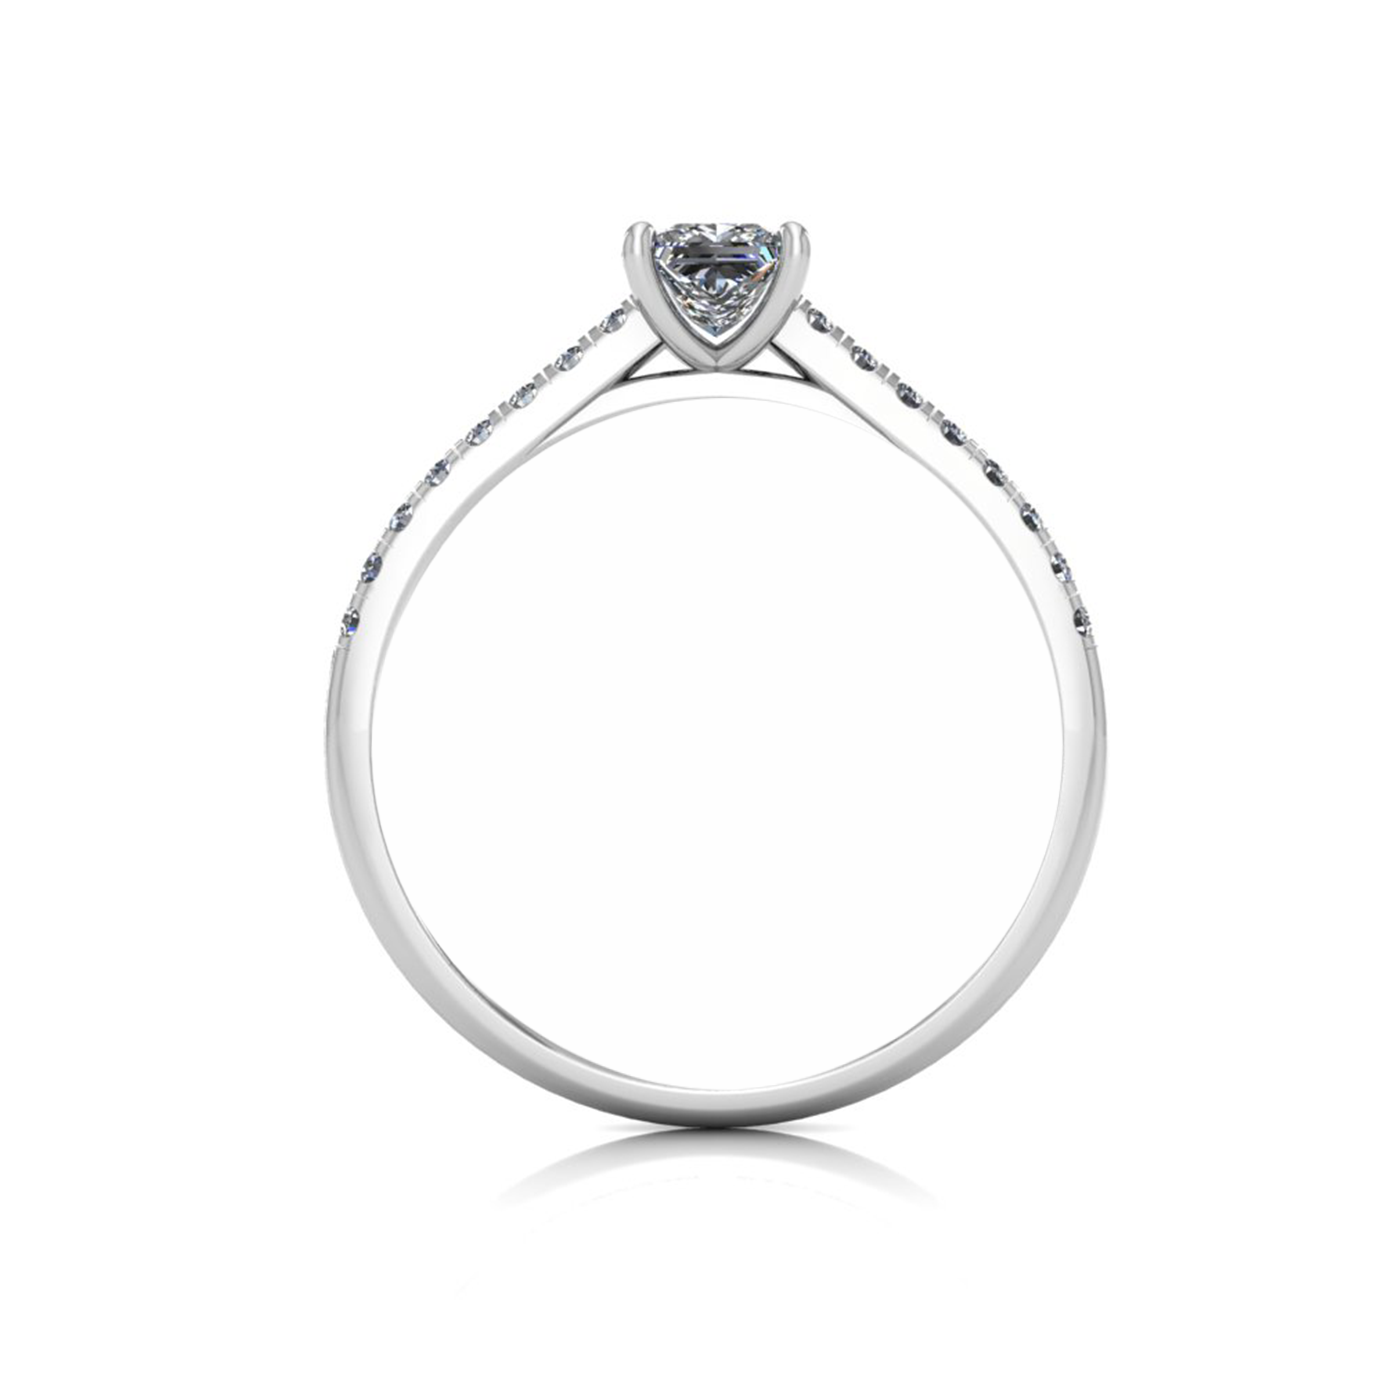 18k white gold  0,30 ct 4 prongs princess cut diamond engagement ring with whisper thin pavÉ set band